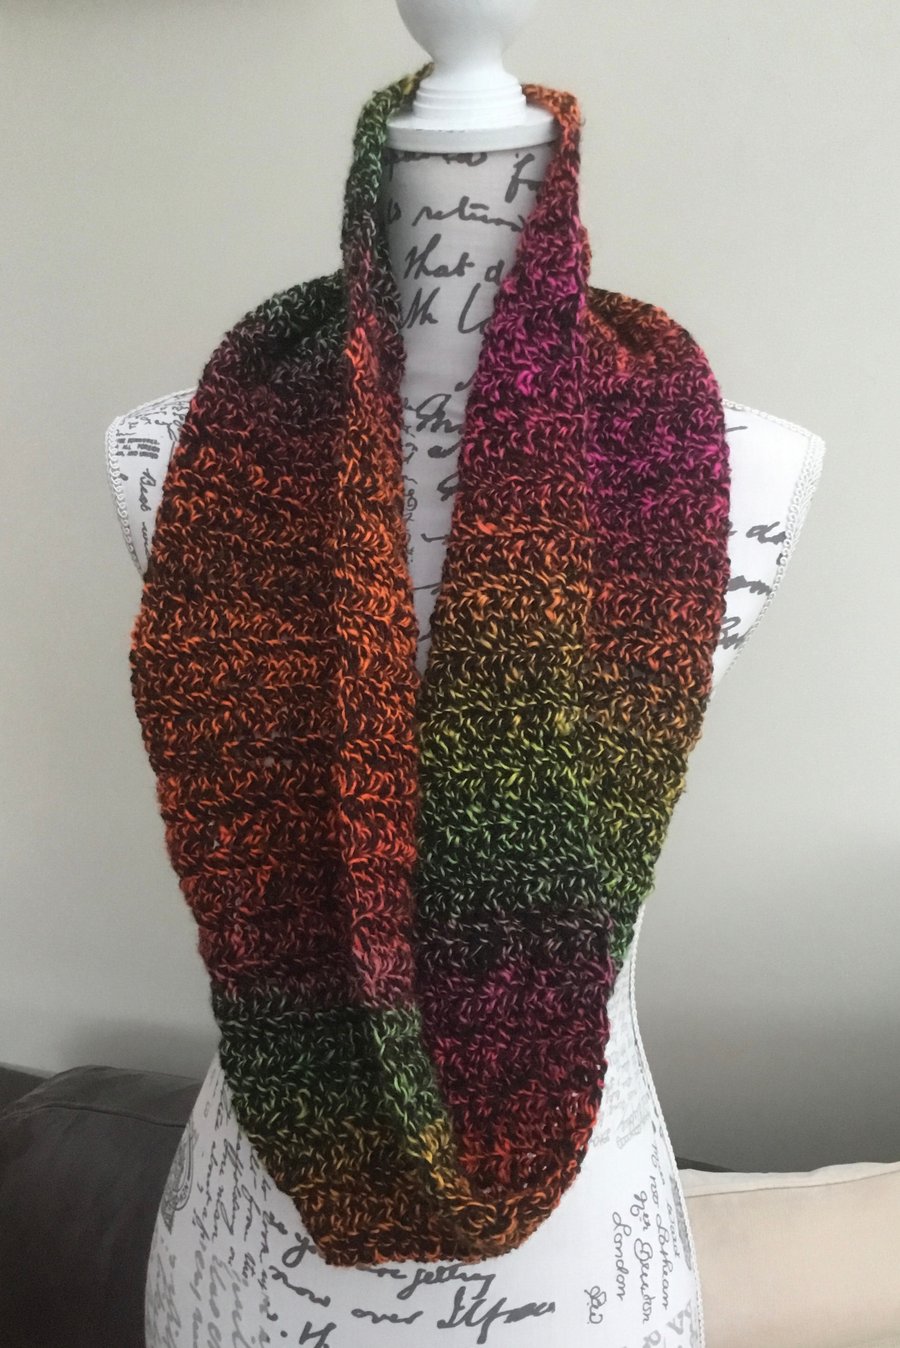 Autumnal Rainbow!  Lovely Crocheted Infinity Scarf in Hayfield Illusion Yarn.